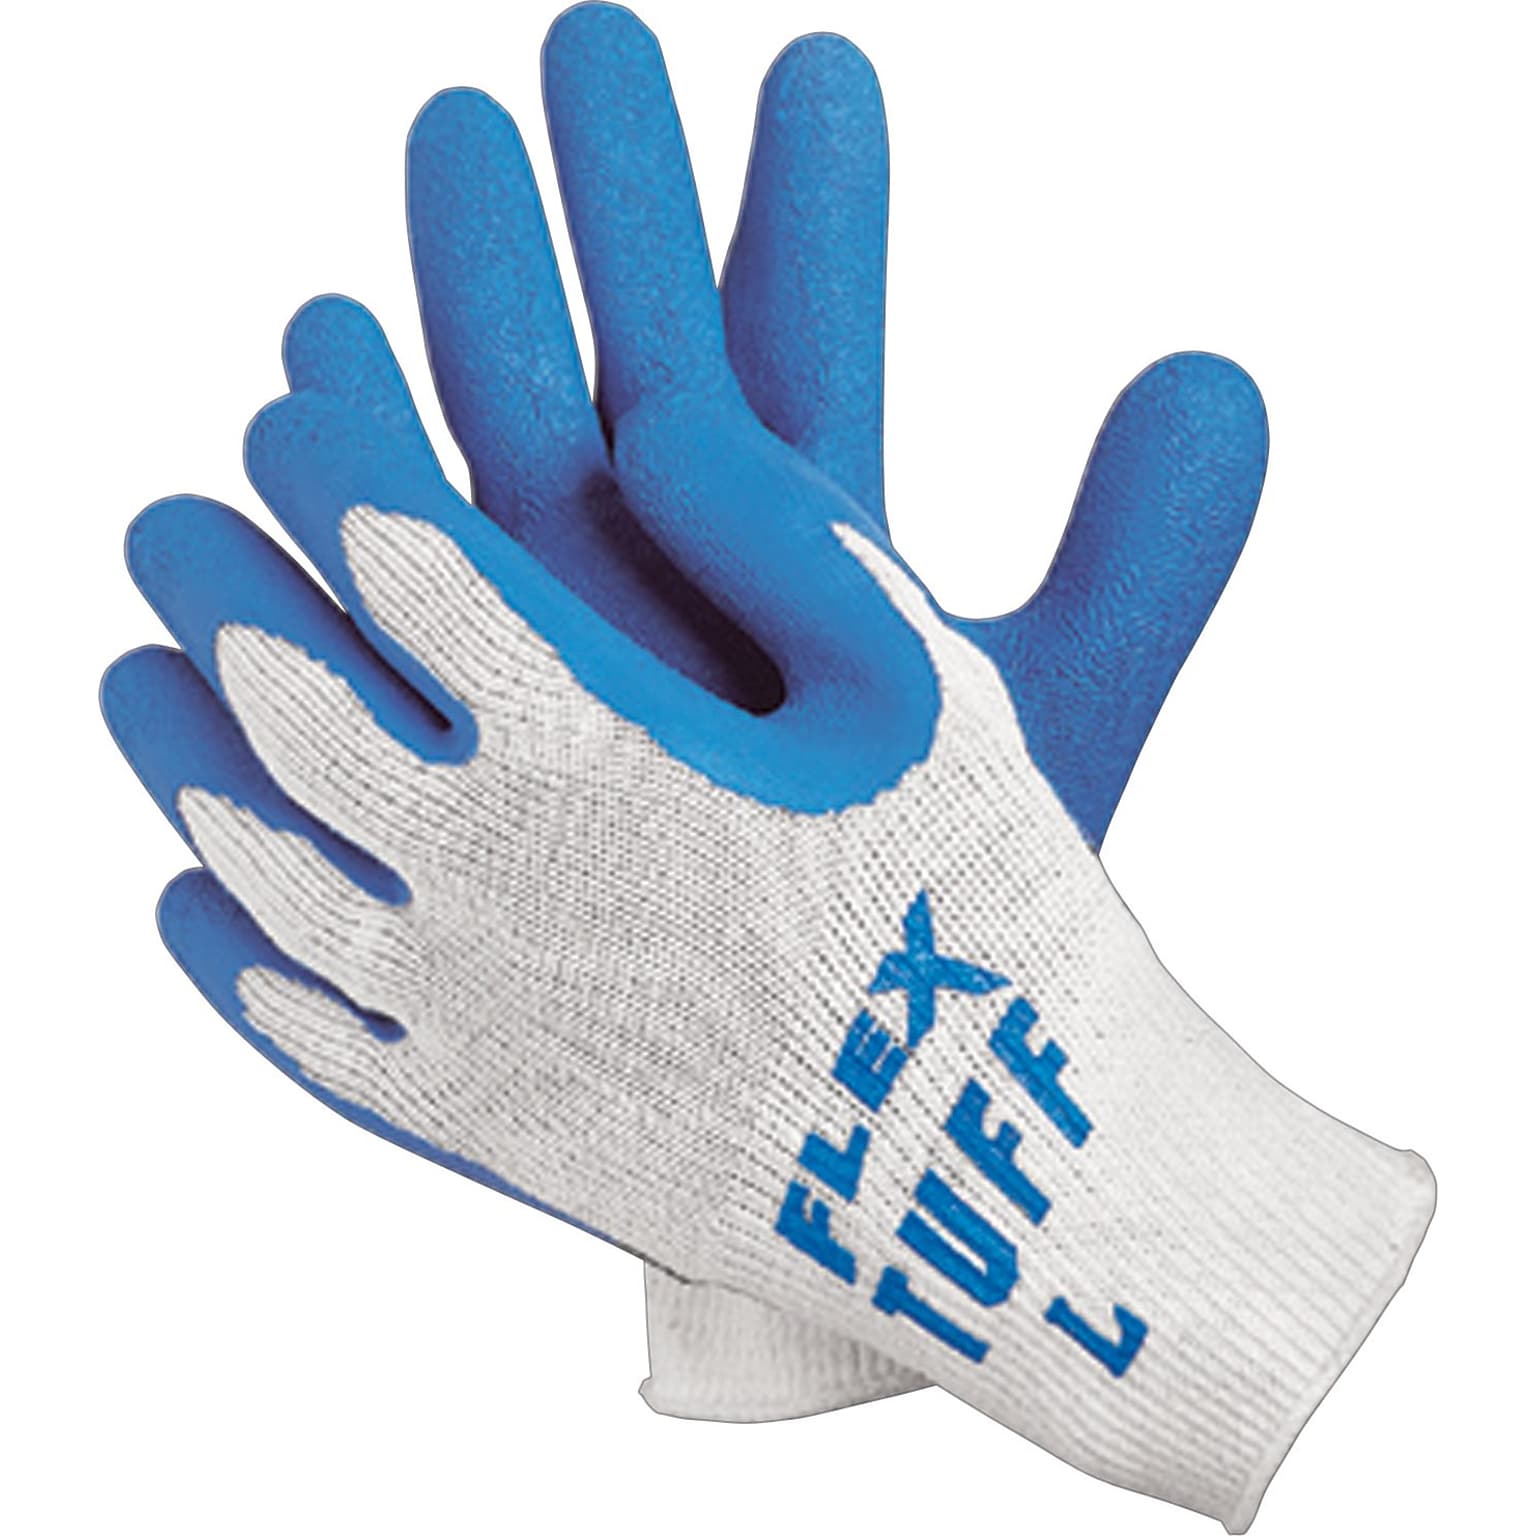 Memphis Gloves® Flex-Tuff® Coated Gloves, Cotton, Knit-Wrist Cuff, M Size, White/Blue, 12 PRS